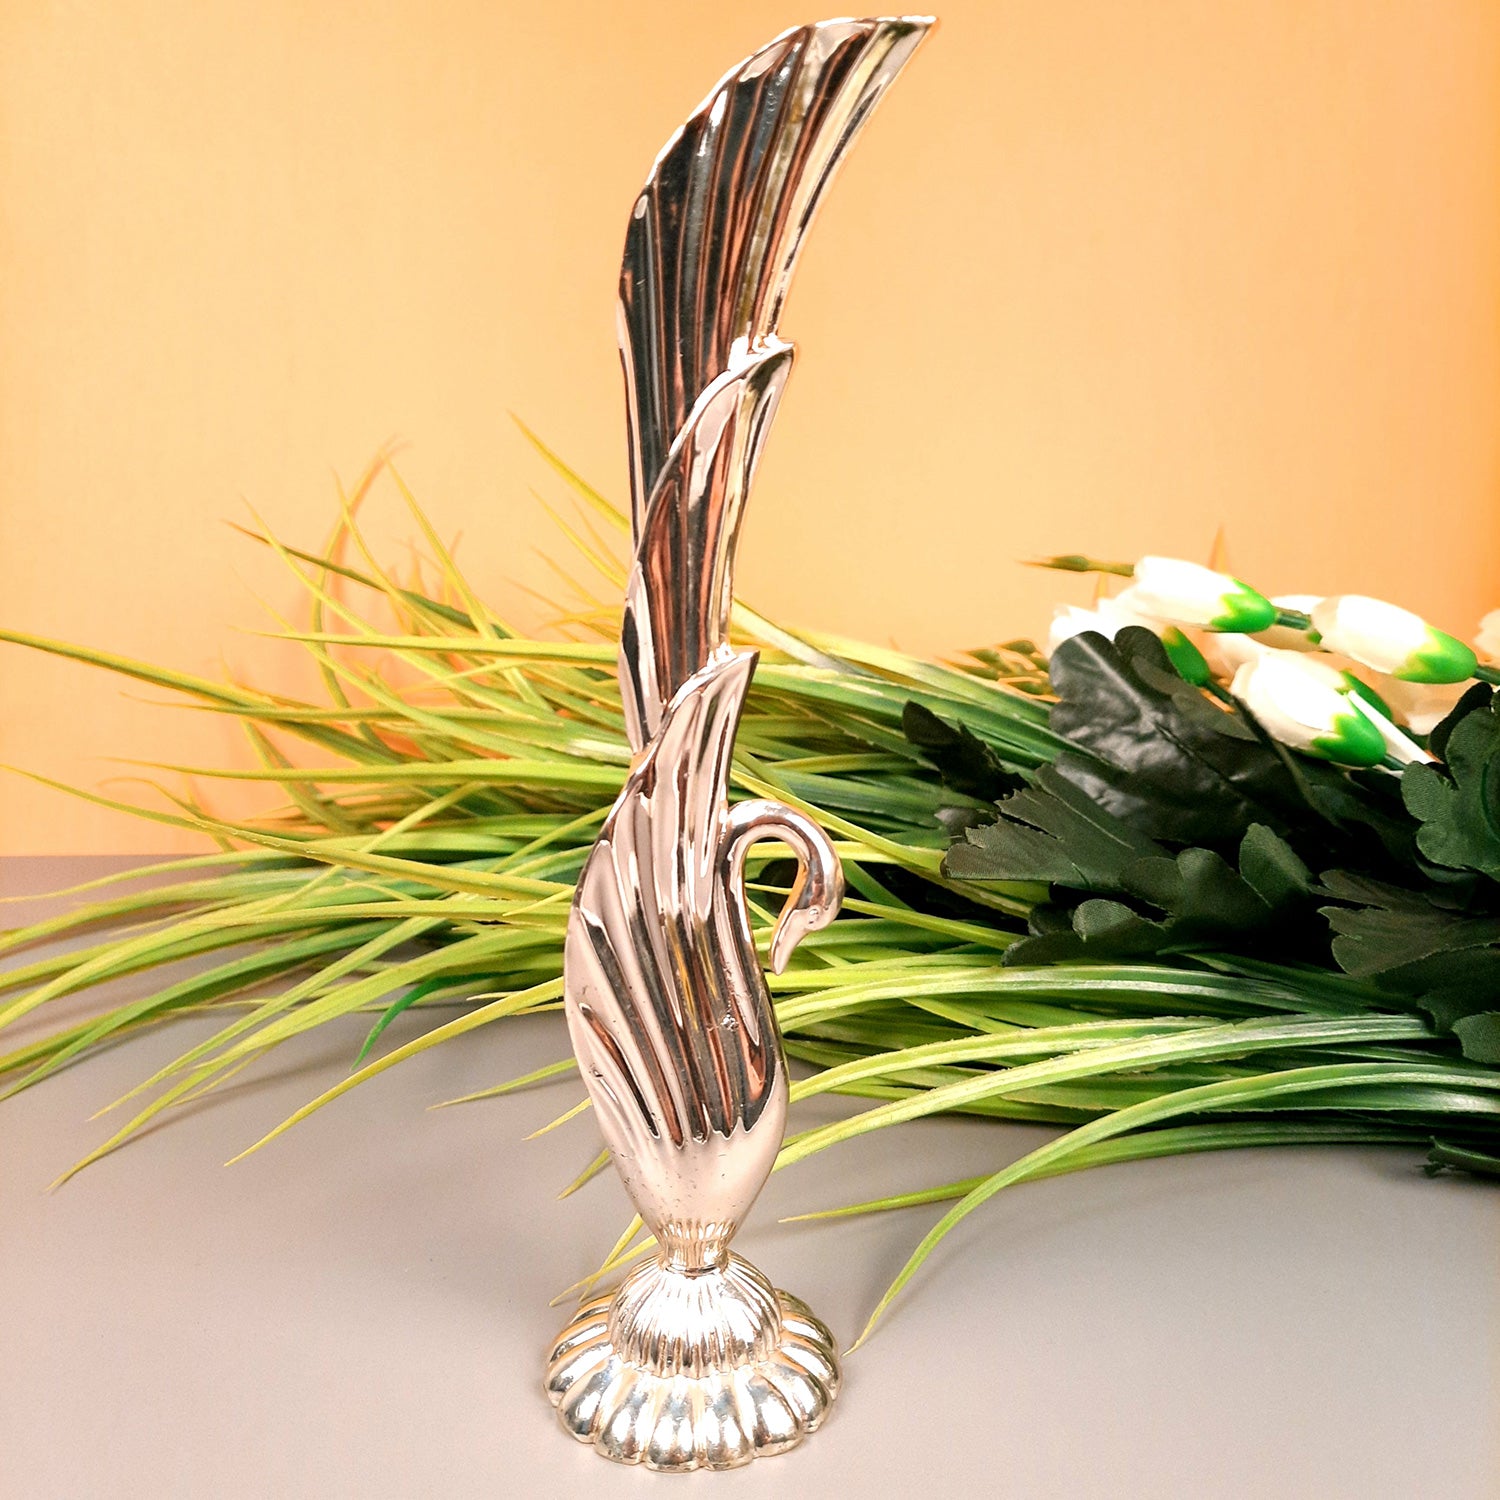 Flower Pot | Decorative Vase Small - Swan Design - For Home, Table, Living Room, Bedroom Decor - 9 Inch - Apkamart